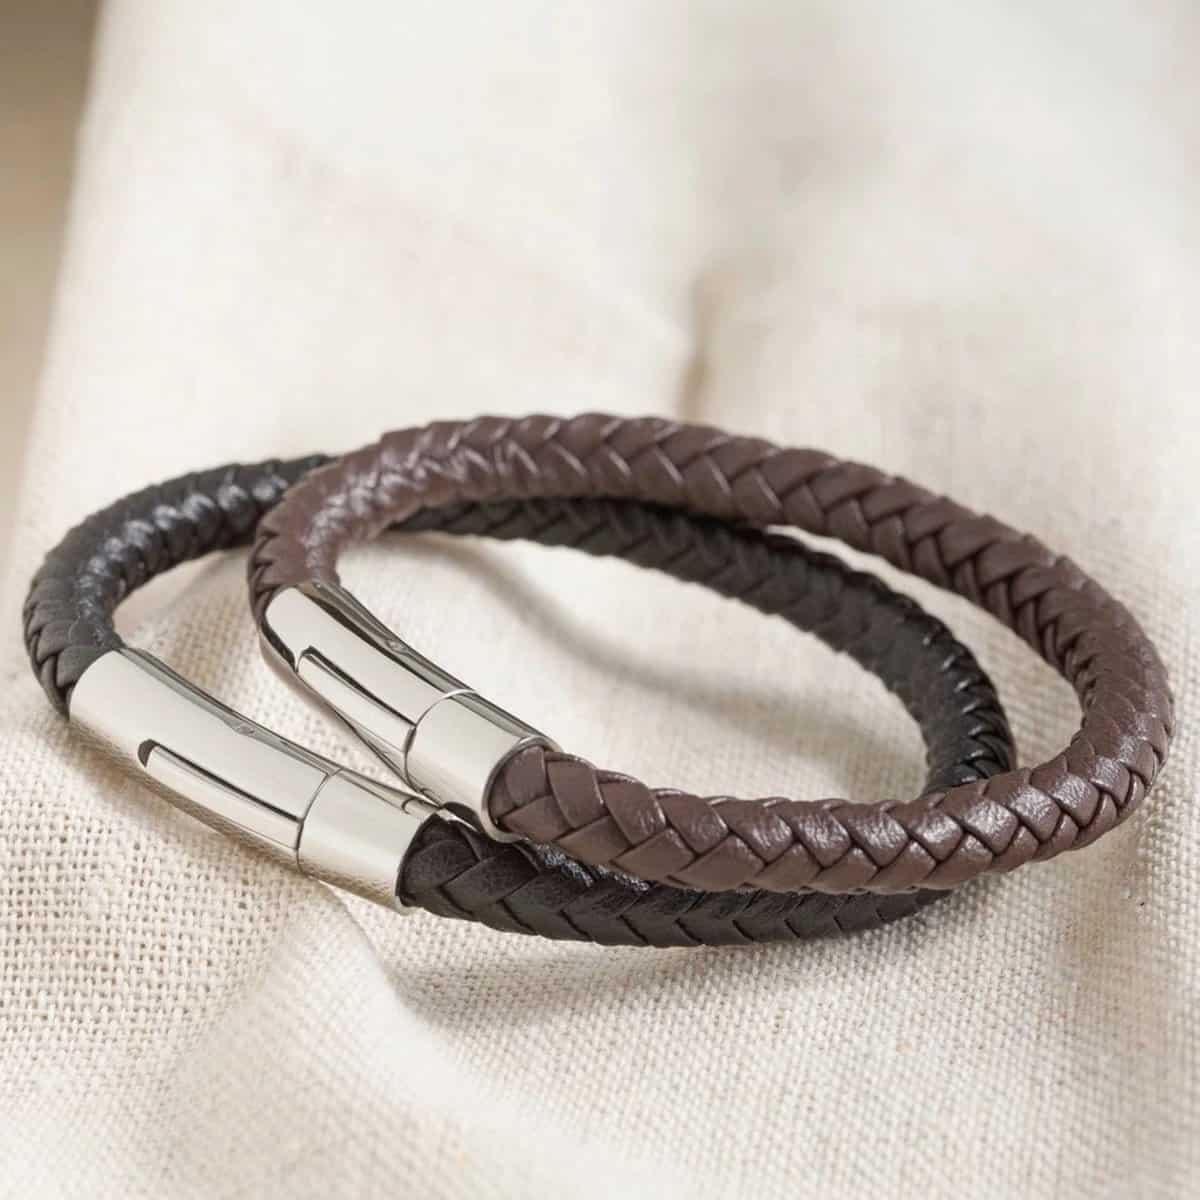 Braided vegan leather bracelets